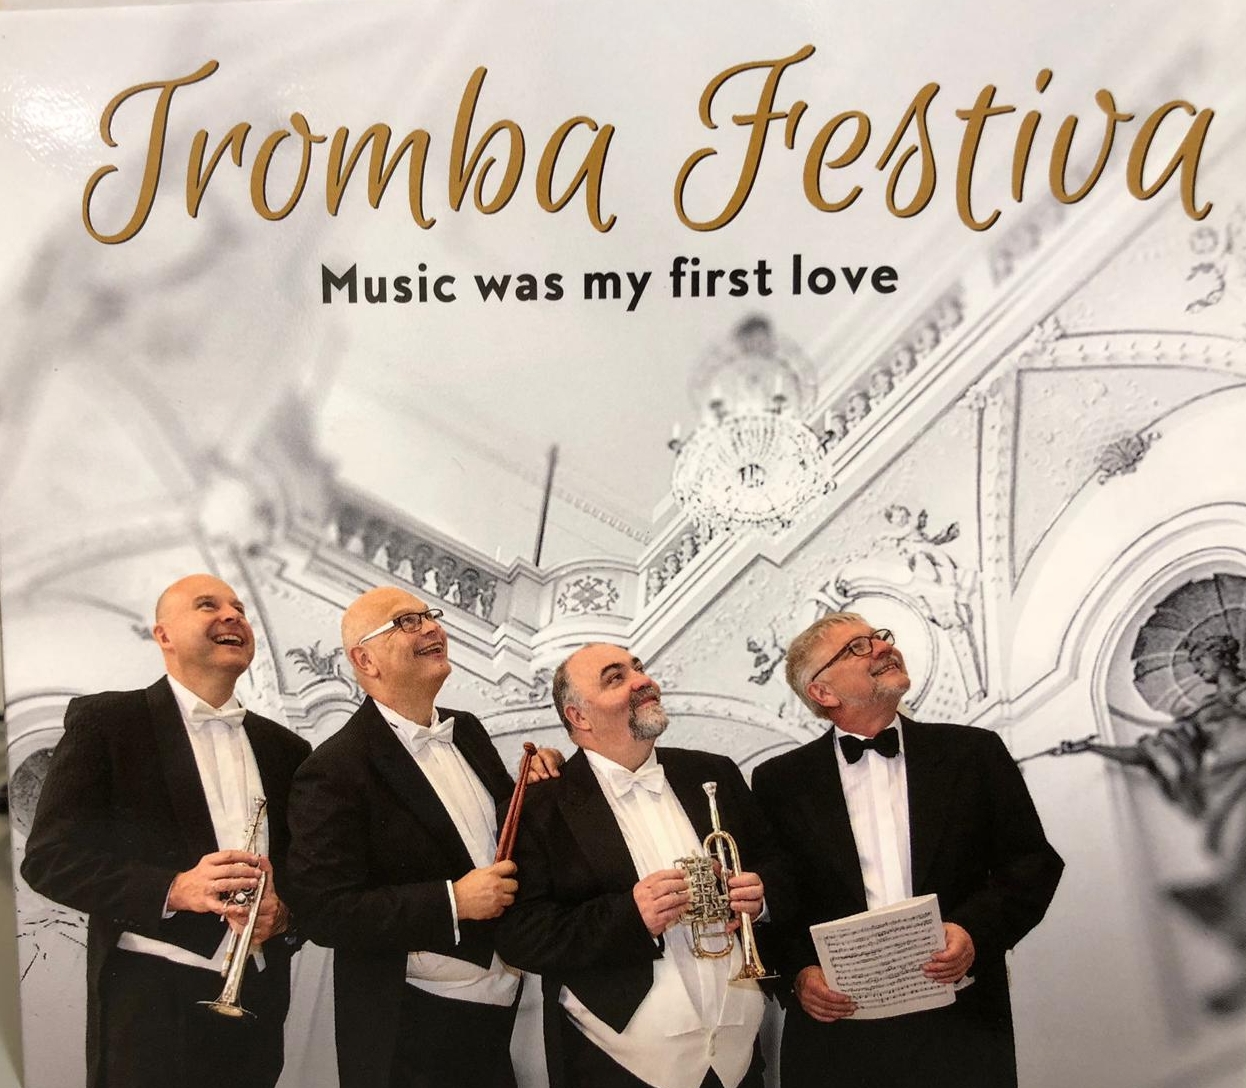 Tromba Festiva Music was my first love